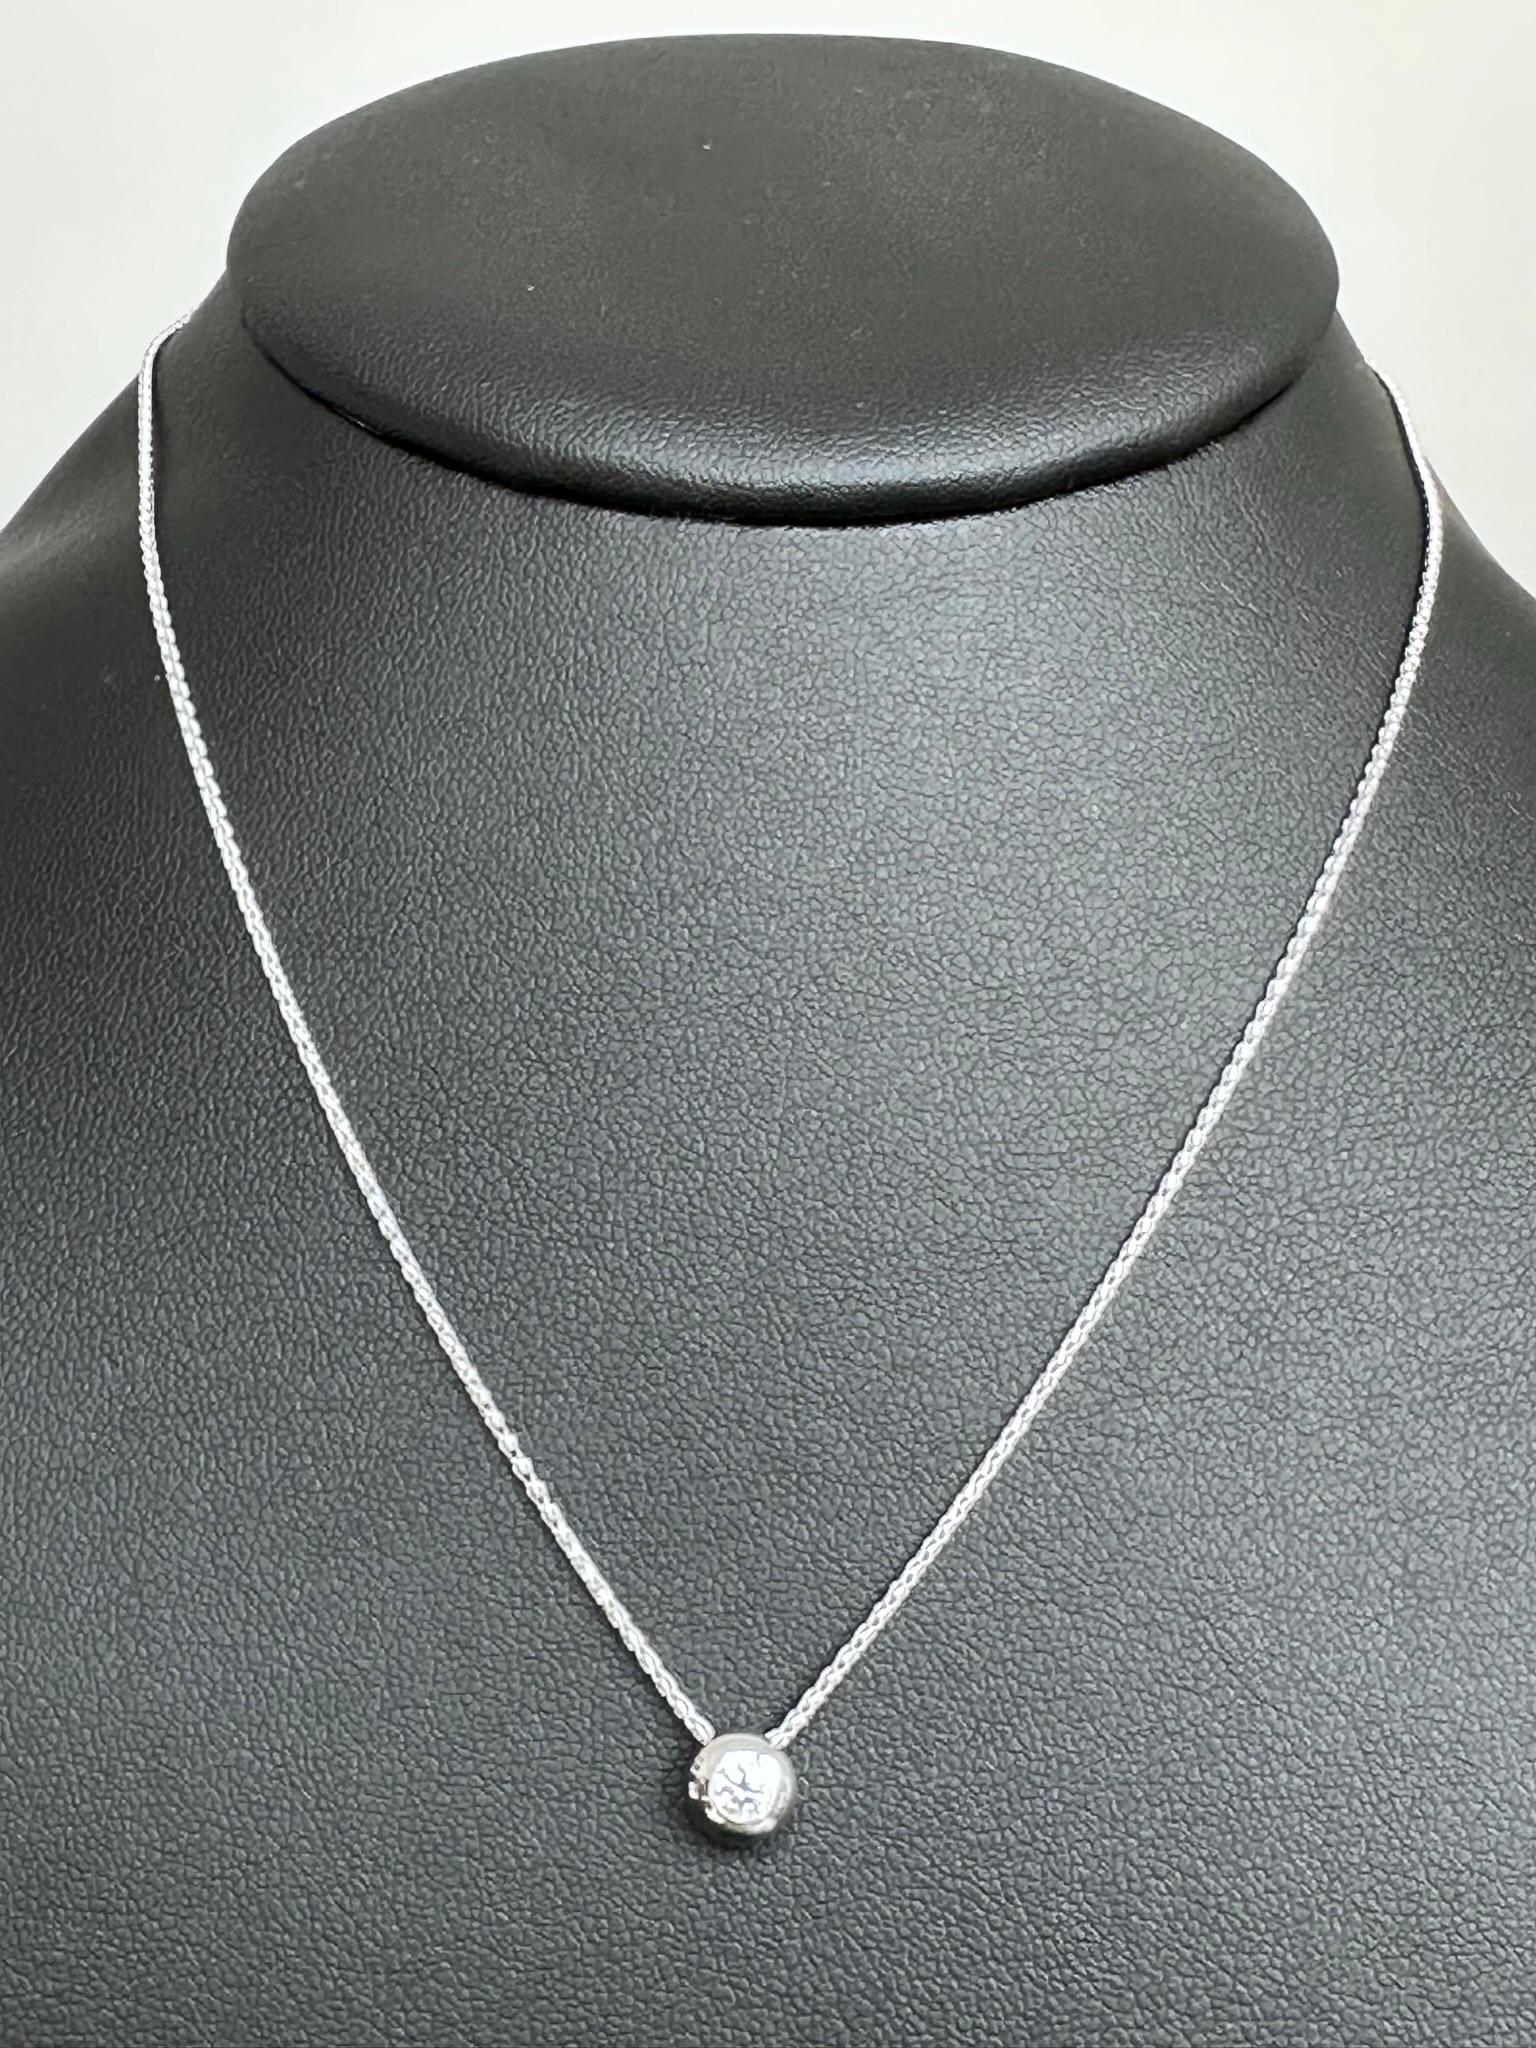 Brilliant Cut Diamond Solitaire Necklace with Chain 18 karat White Gold For Sale